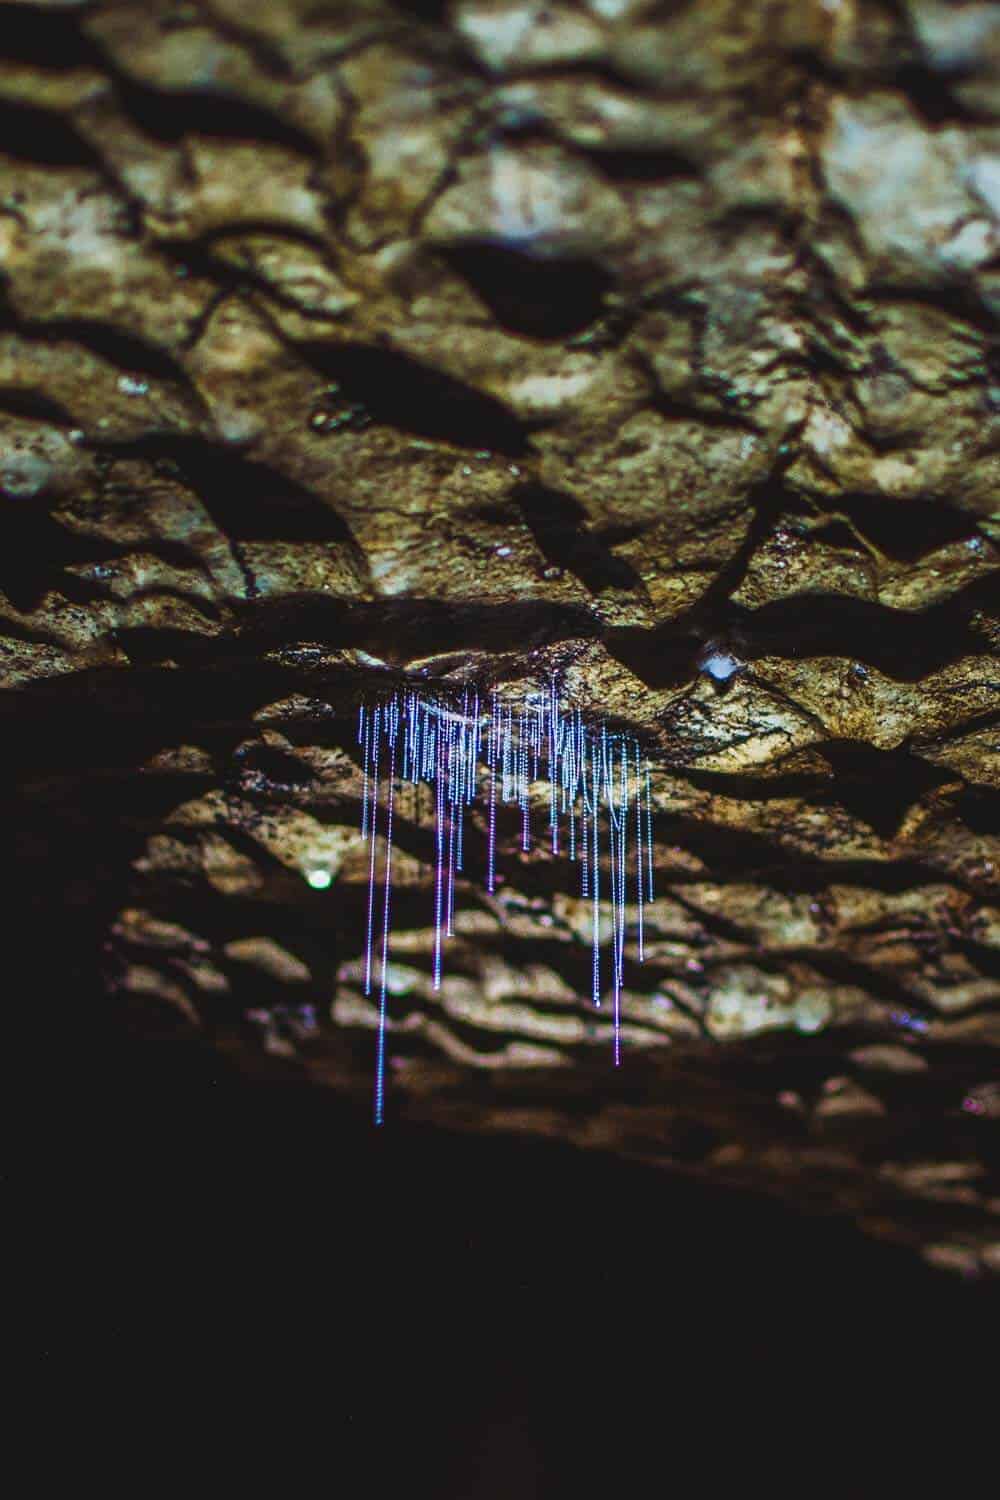 Waitomo Cave tours to see the glowworms